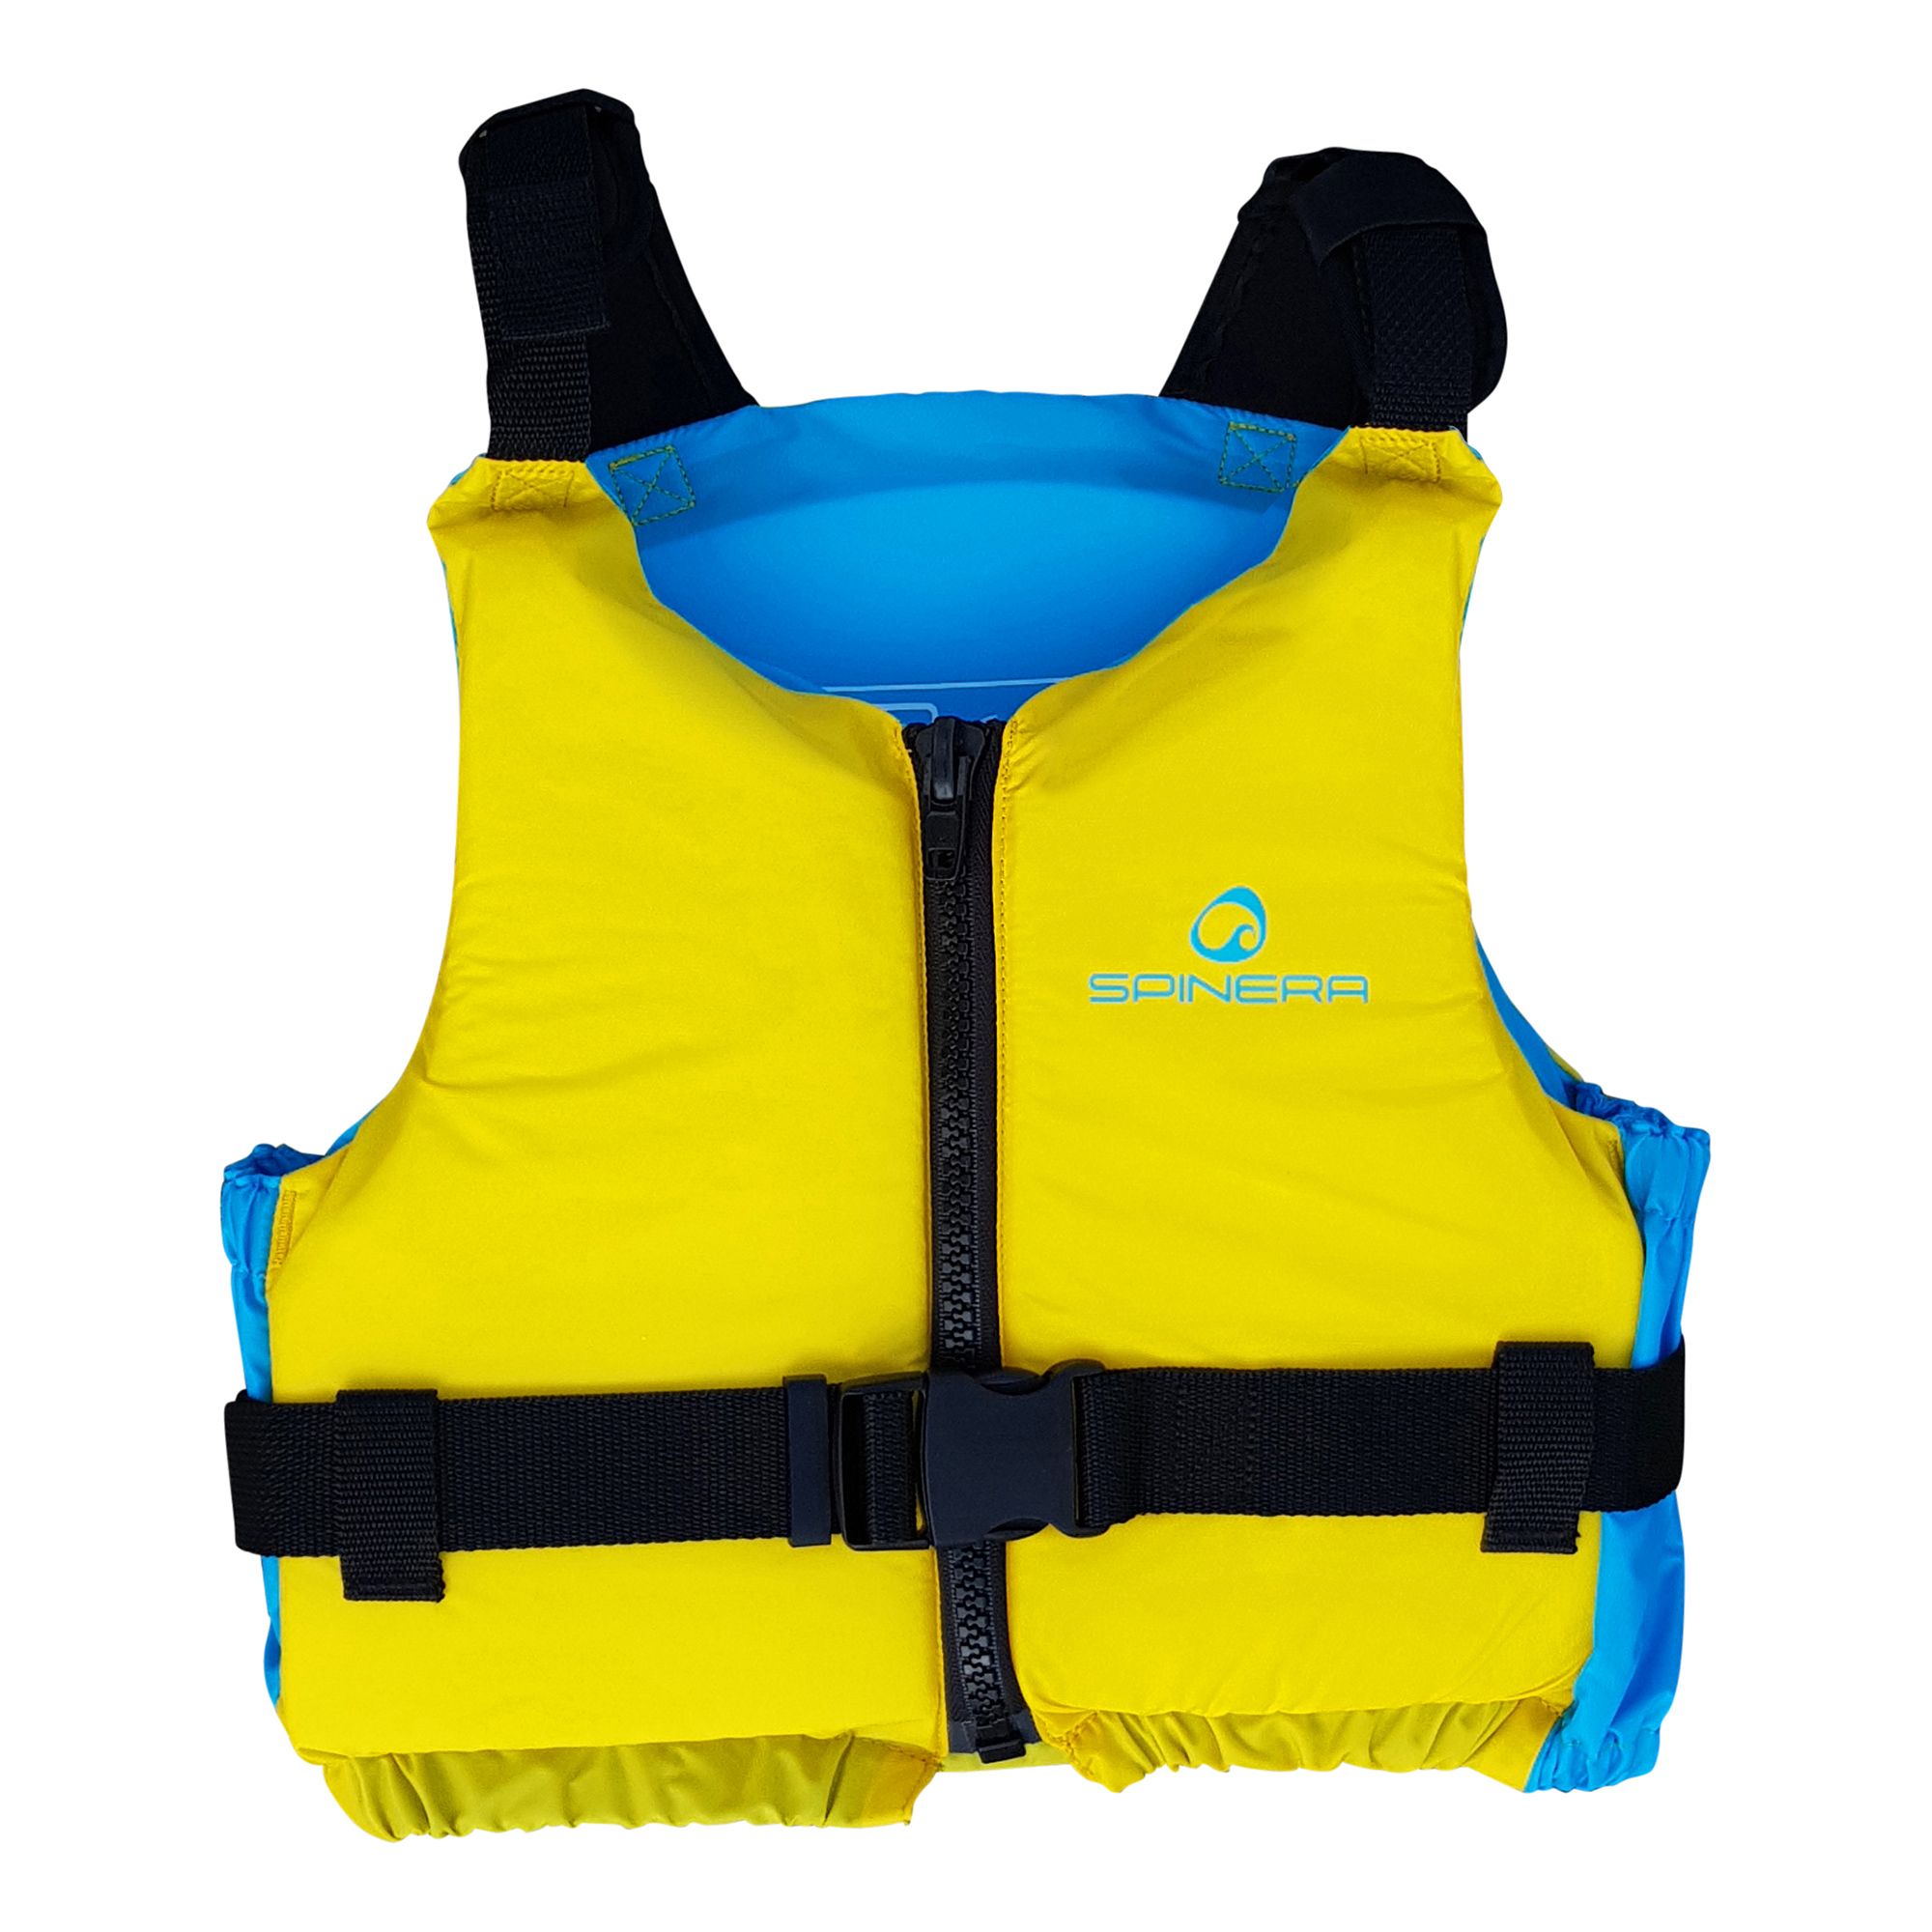 Spinera Aquapark / Kayak / SUP Nylon Vest Kids